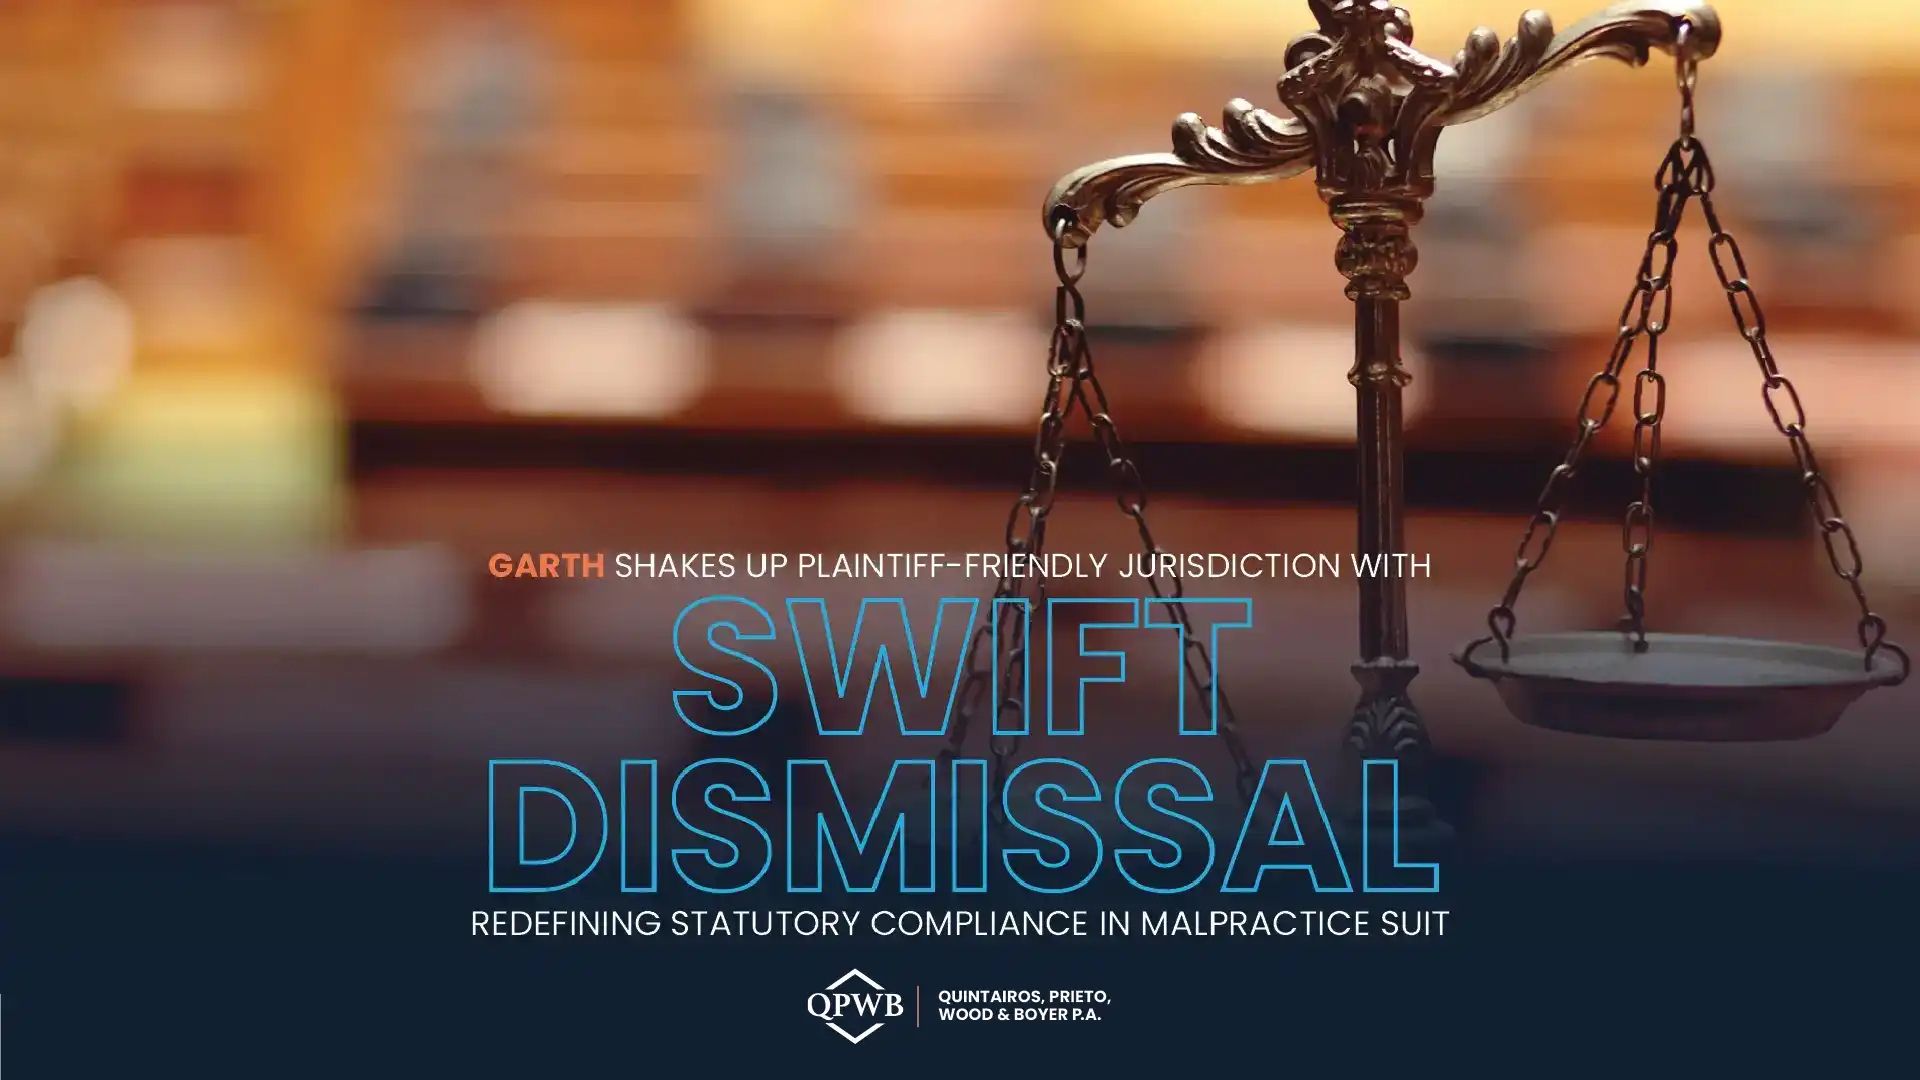 Garth Shakes Up Plaintiff-Friendly Jurisdiction With Swift Dismissal, Redefining Statutory Compliance In Malpractice Suit